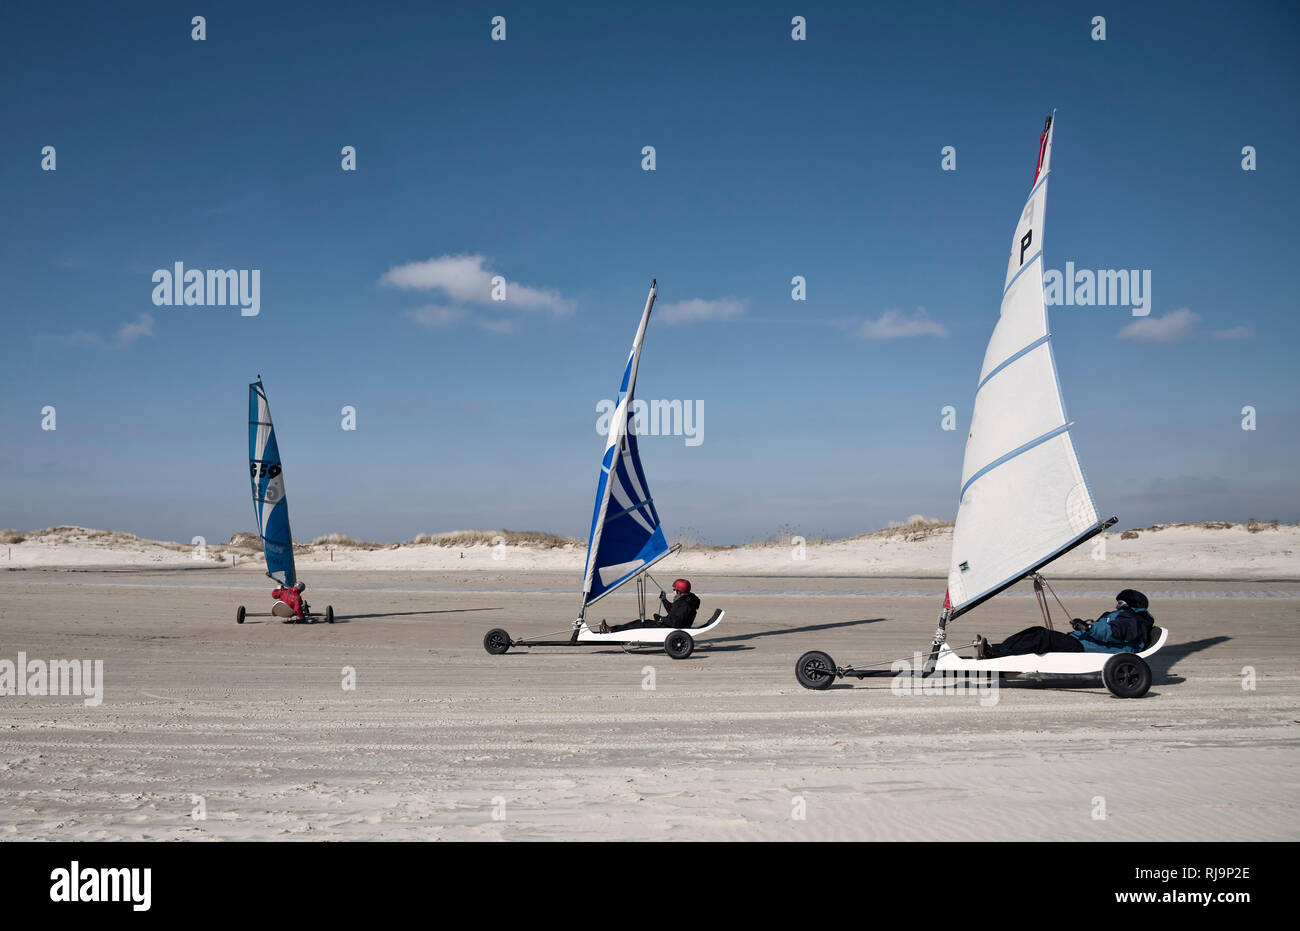 Drei Strandsegler am Sandstrand segeln mit dem Wind Foto Stock